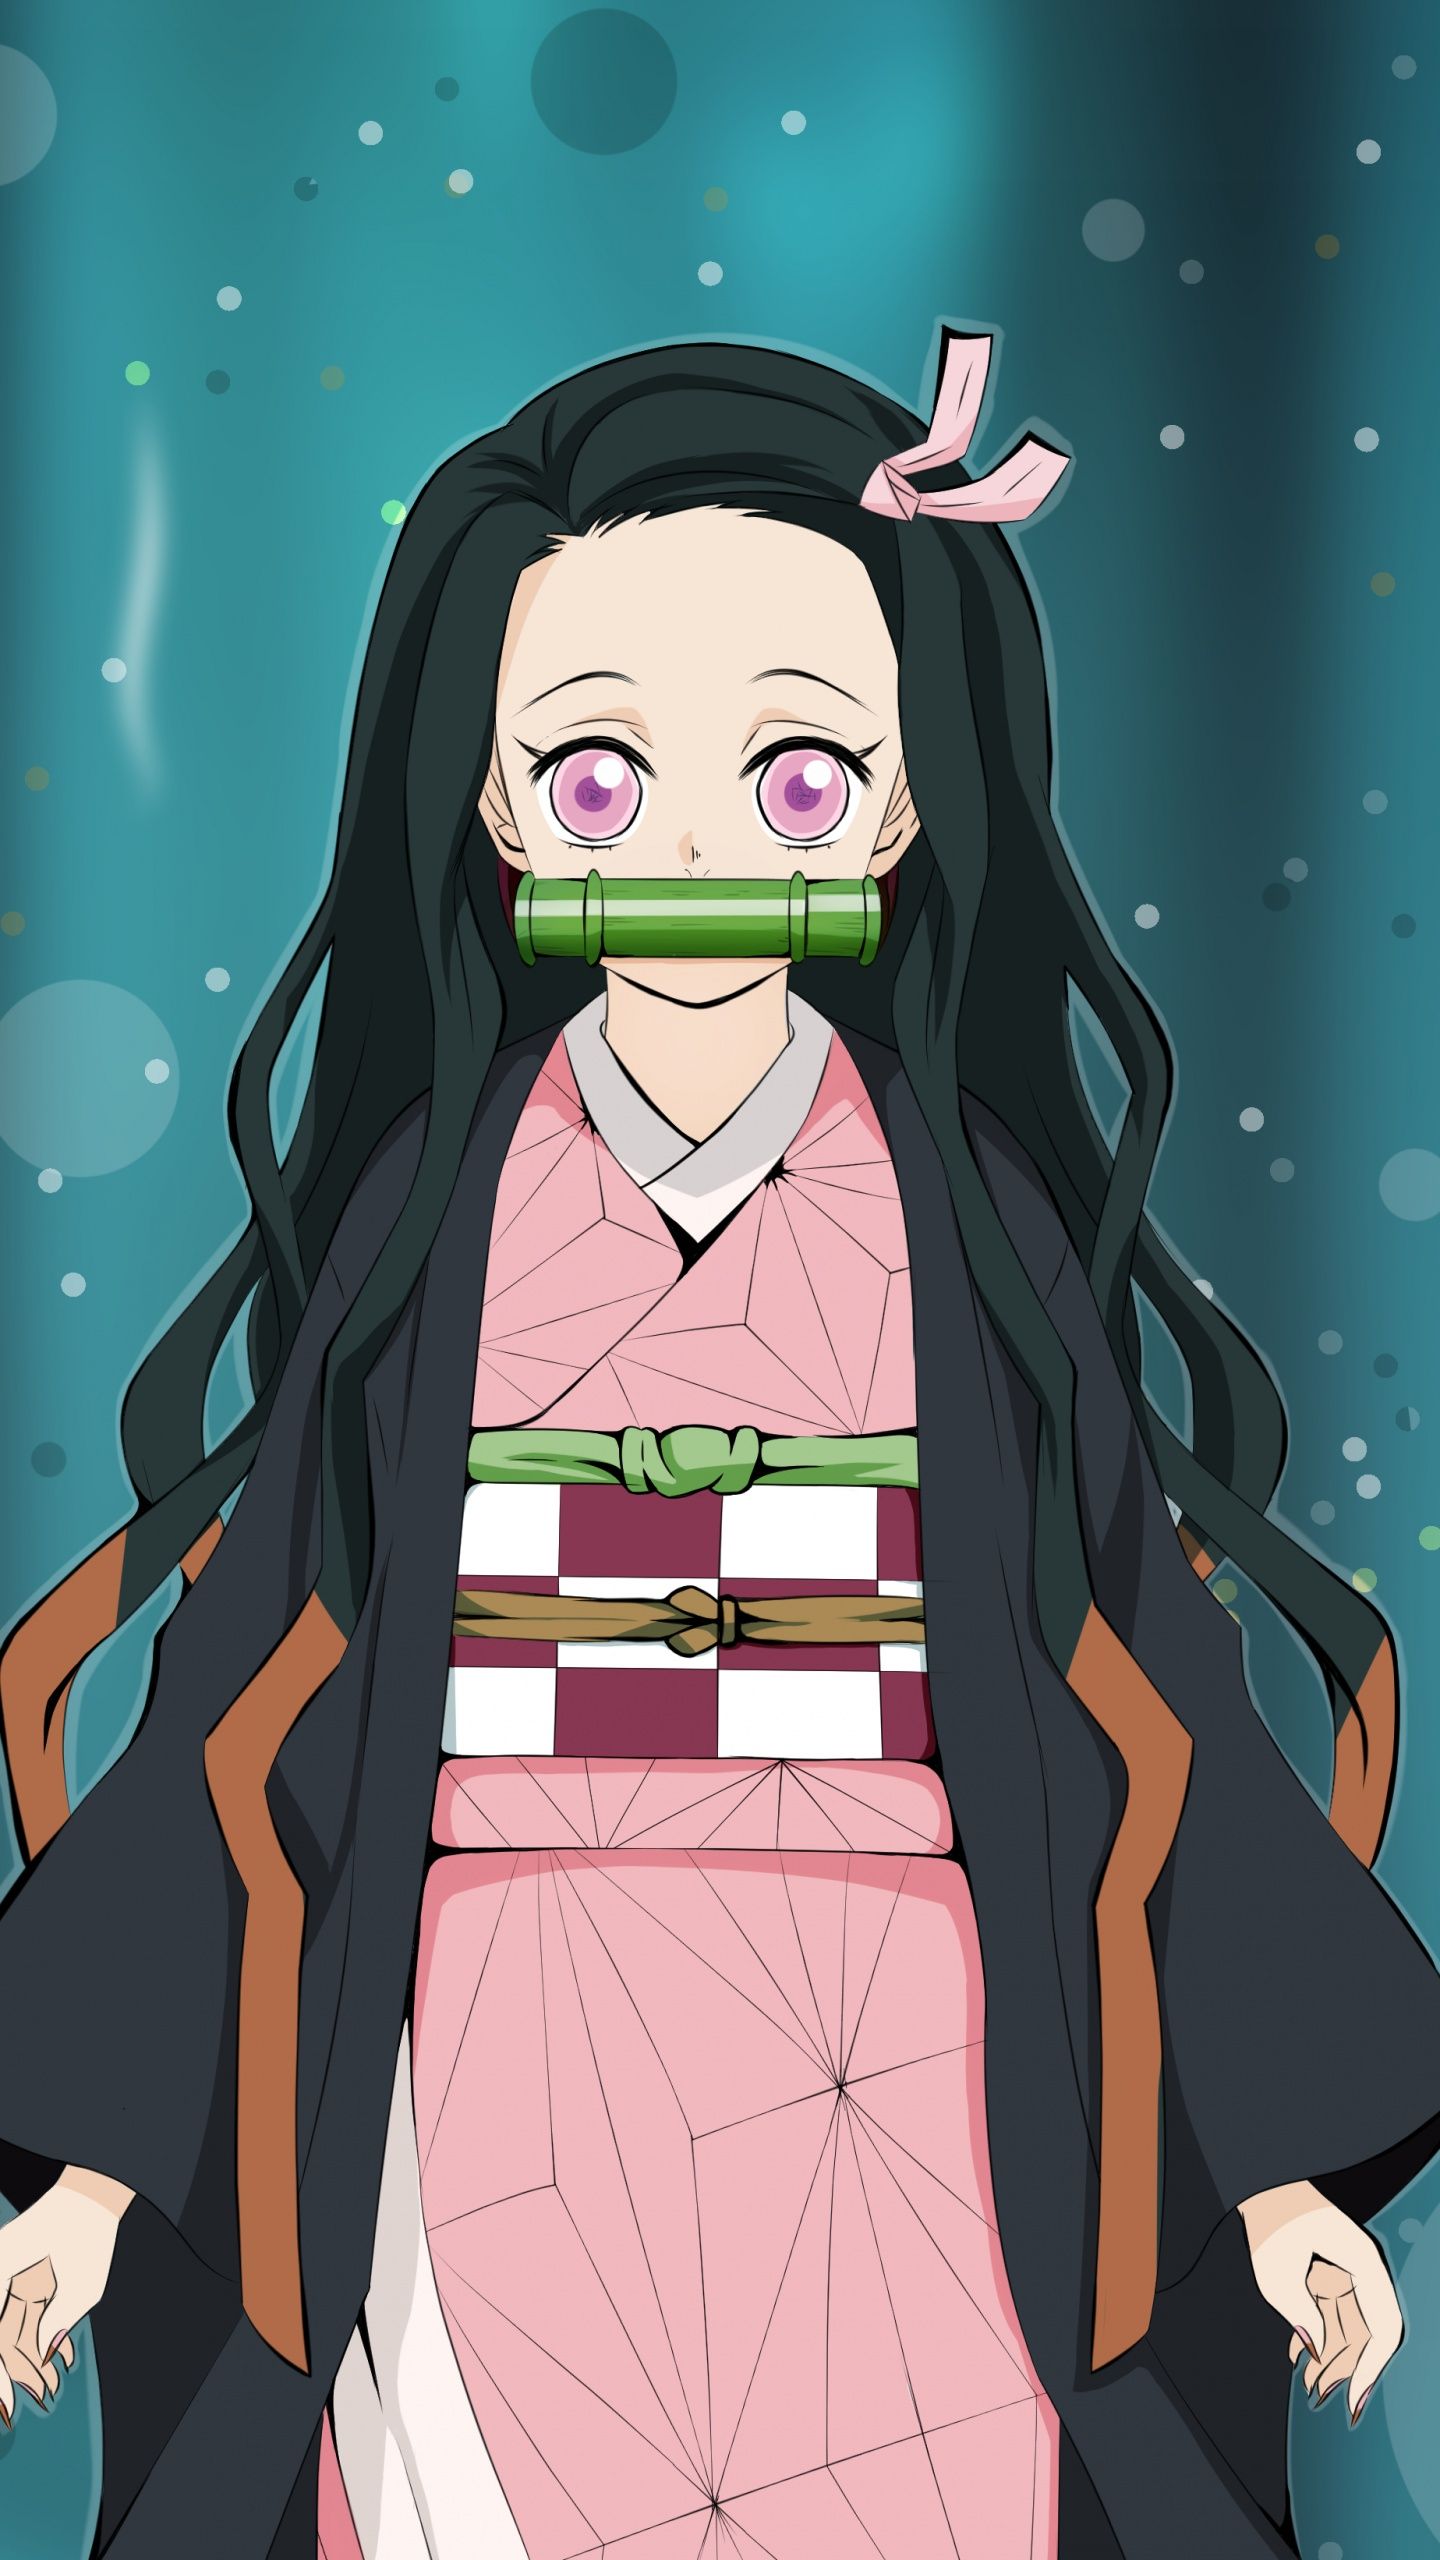 Nezuko Kamado from Demon Slayer: Kimetsu no Yaiba. She is wearing a pink kimono with a green and white obi, and a black outer jacket. She has long black hair and pink eyes. - Nezuko